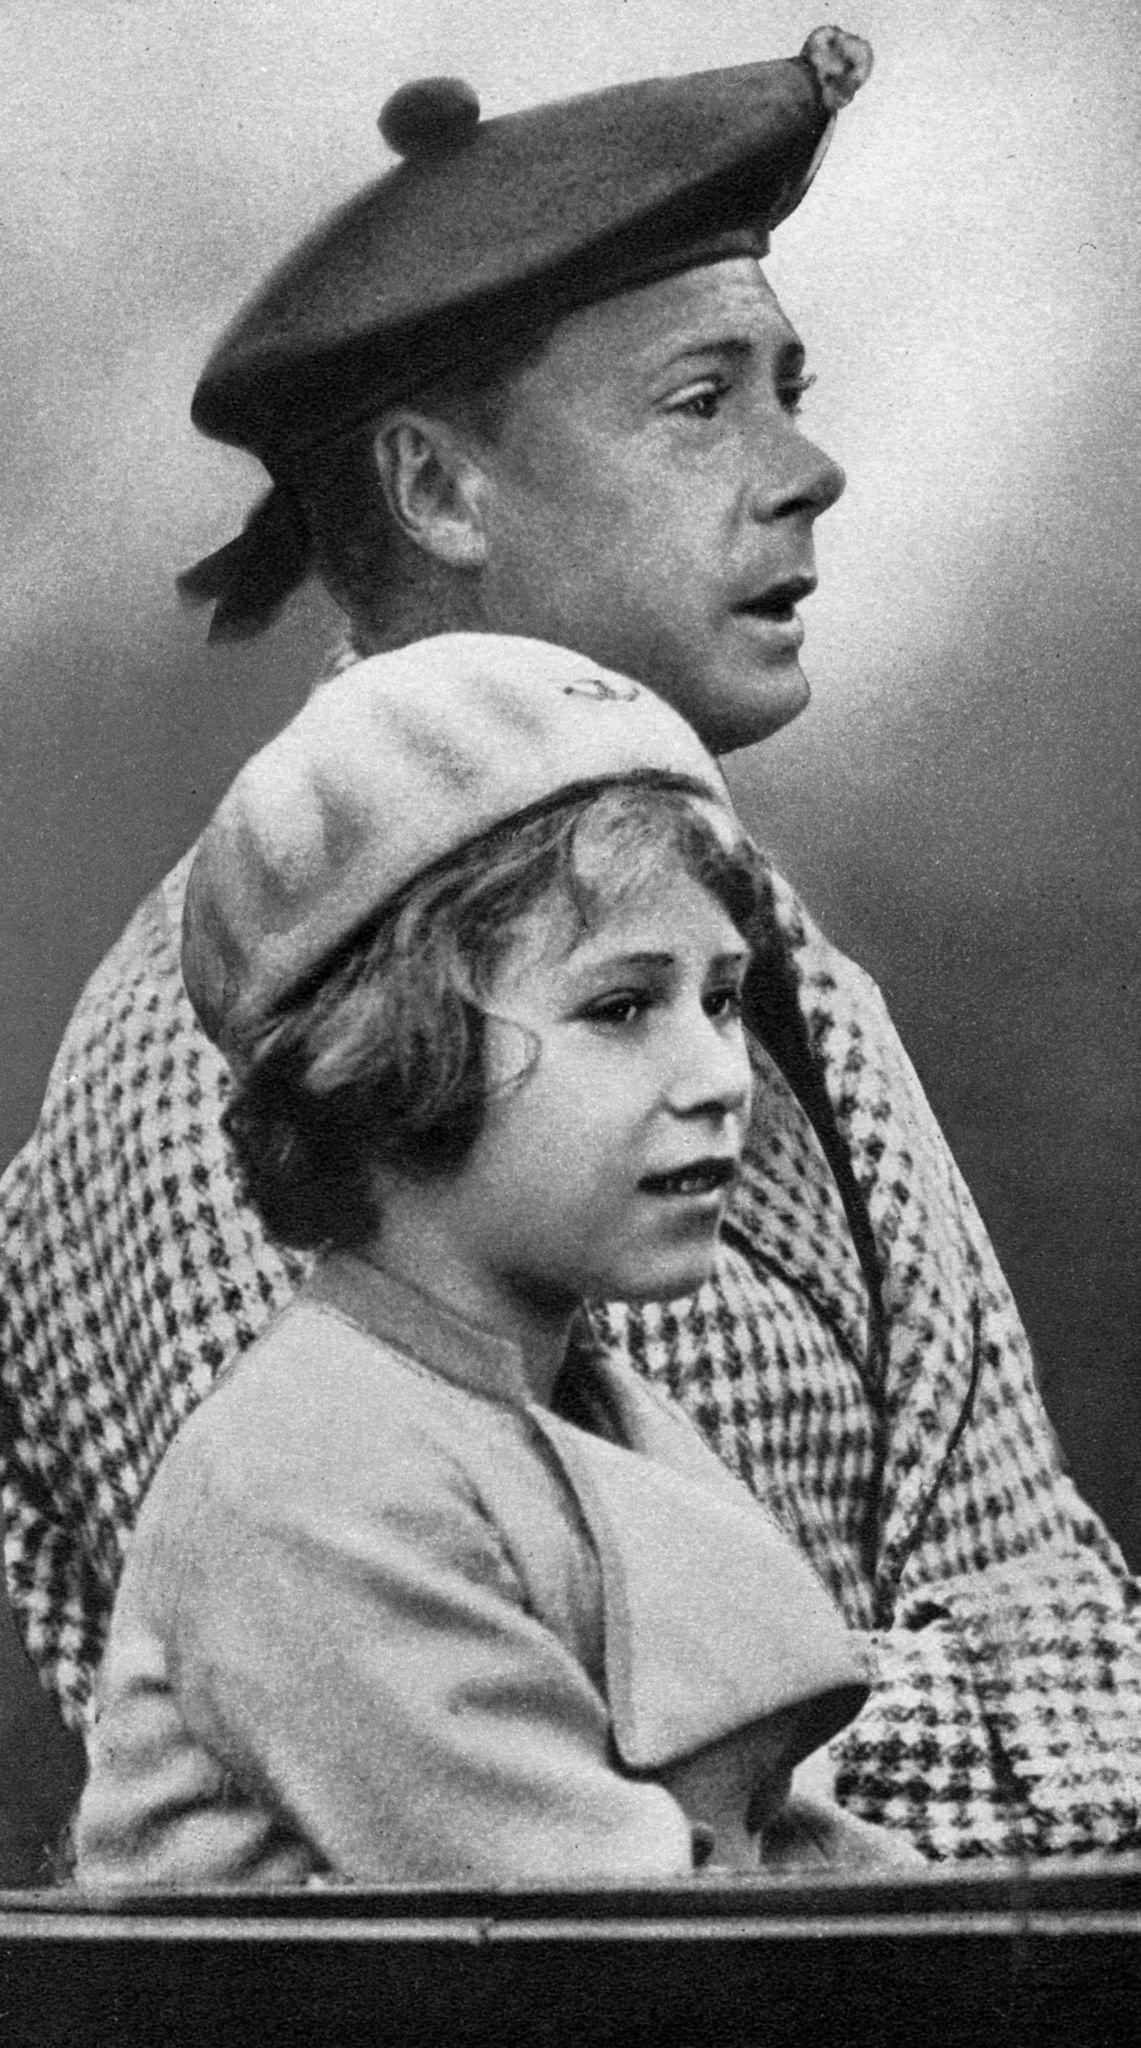 Princess Elizabeth with her uncle David, 1936.